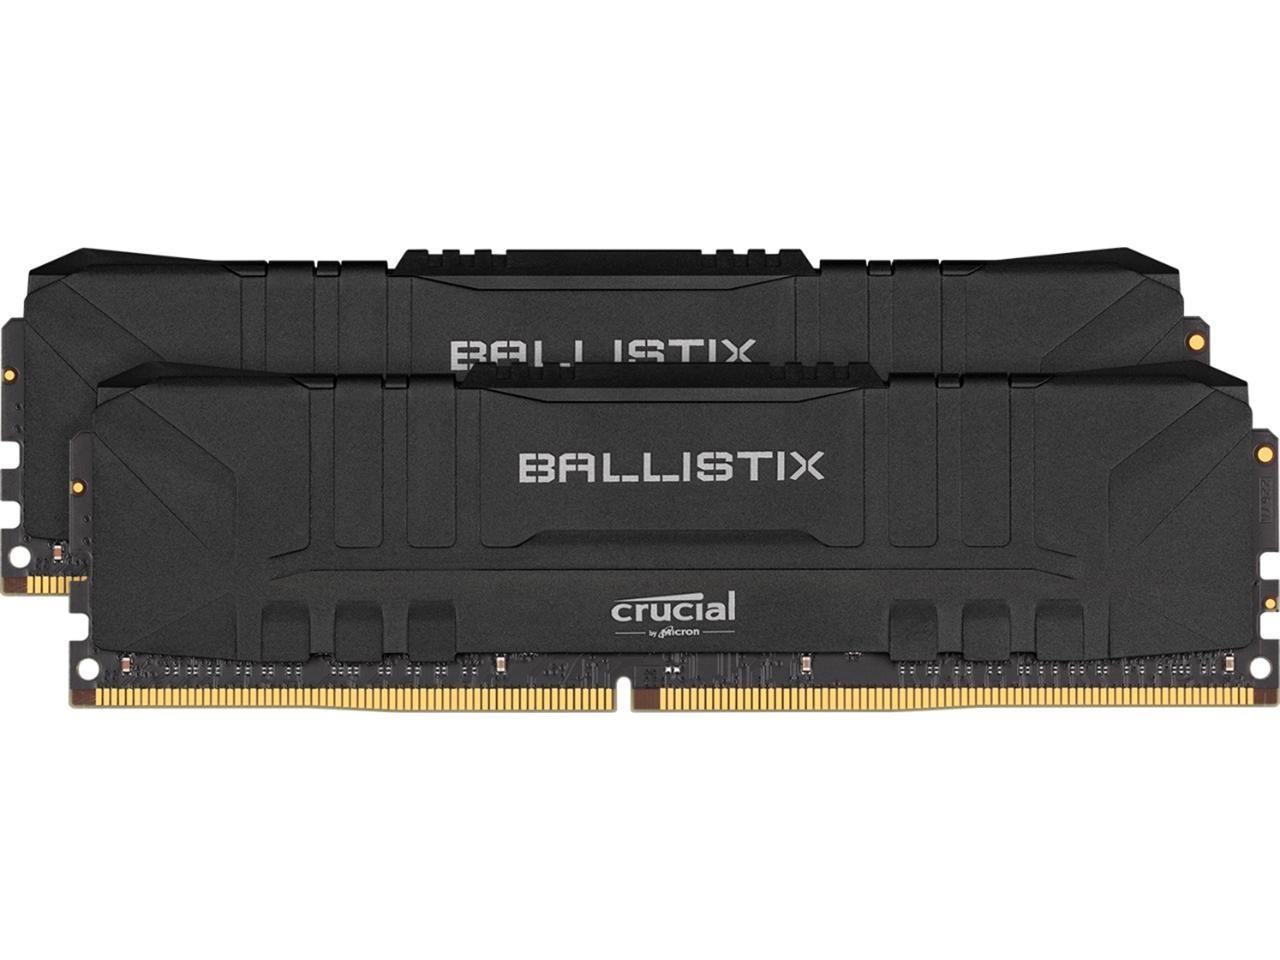 Crucial Ballistix 3000 MHz DDR4 DRAM Desktop Gaming Memory Kit 16GB (8GBx2) CL15 - Shipped - $71.99